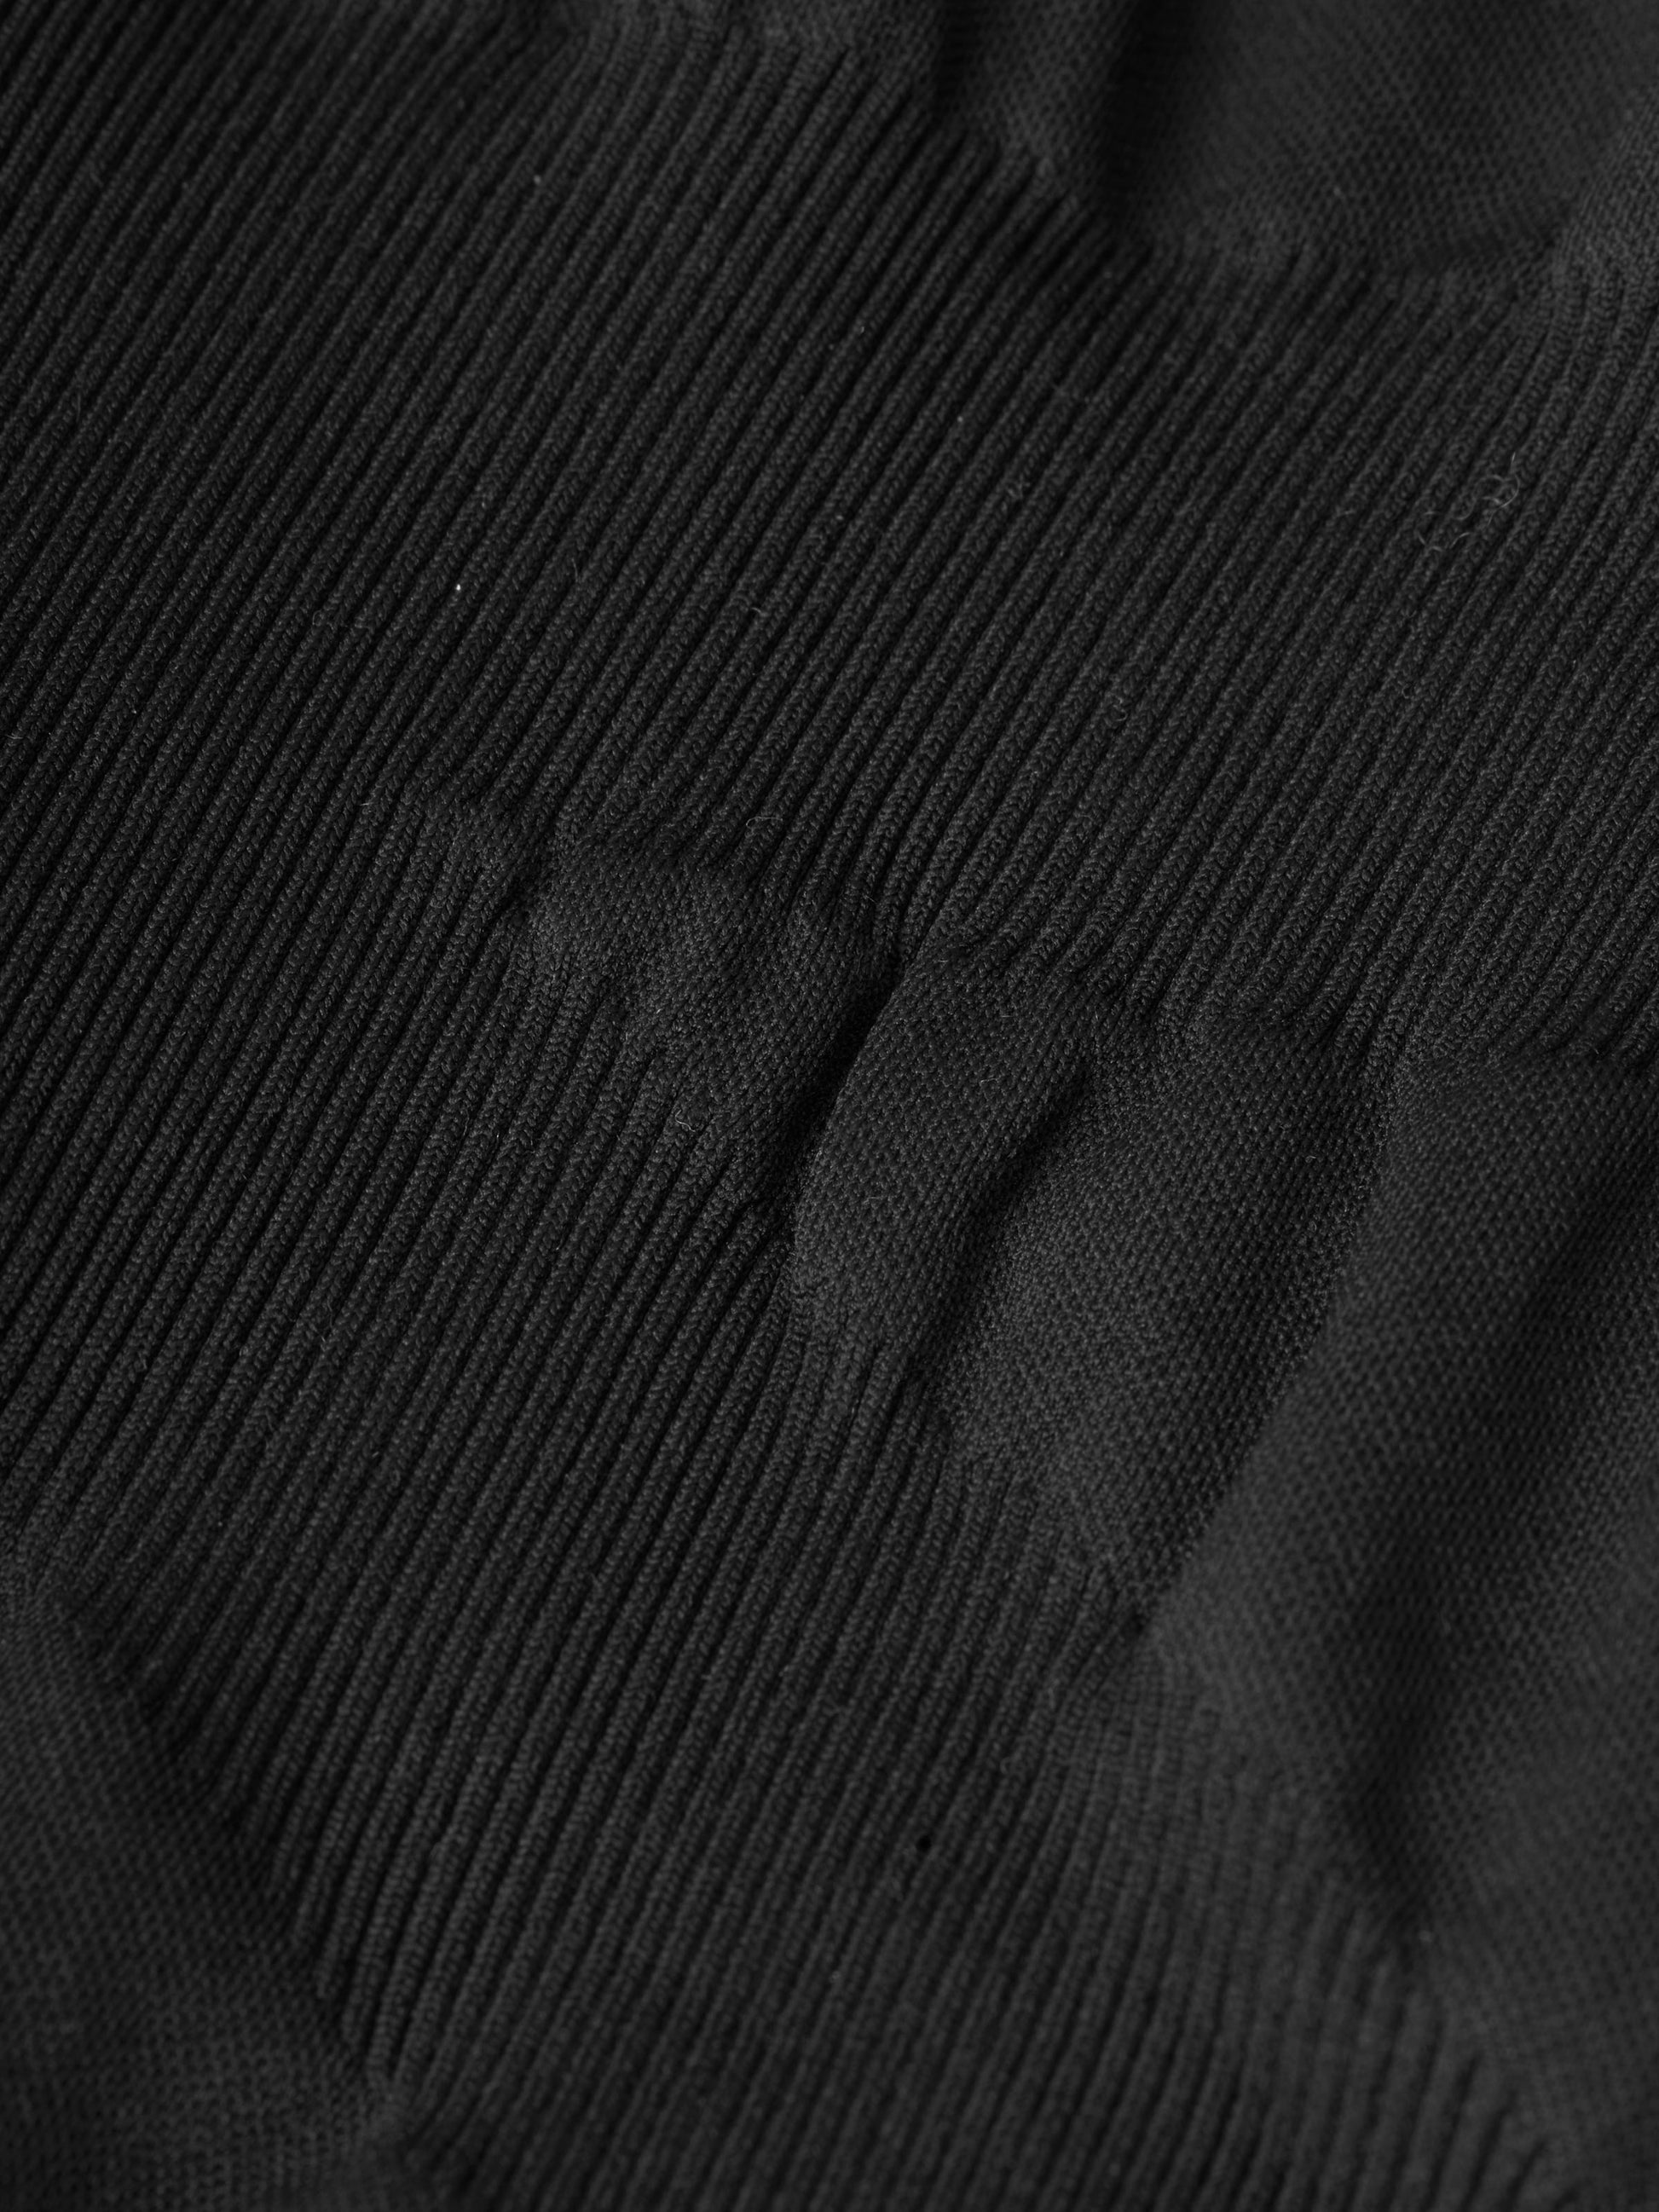 7 DAYS Seamless Tights Knitwear 001 Black